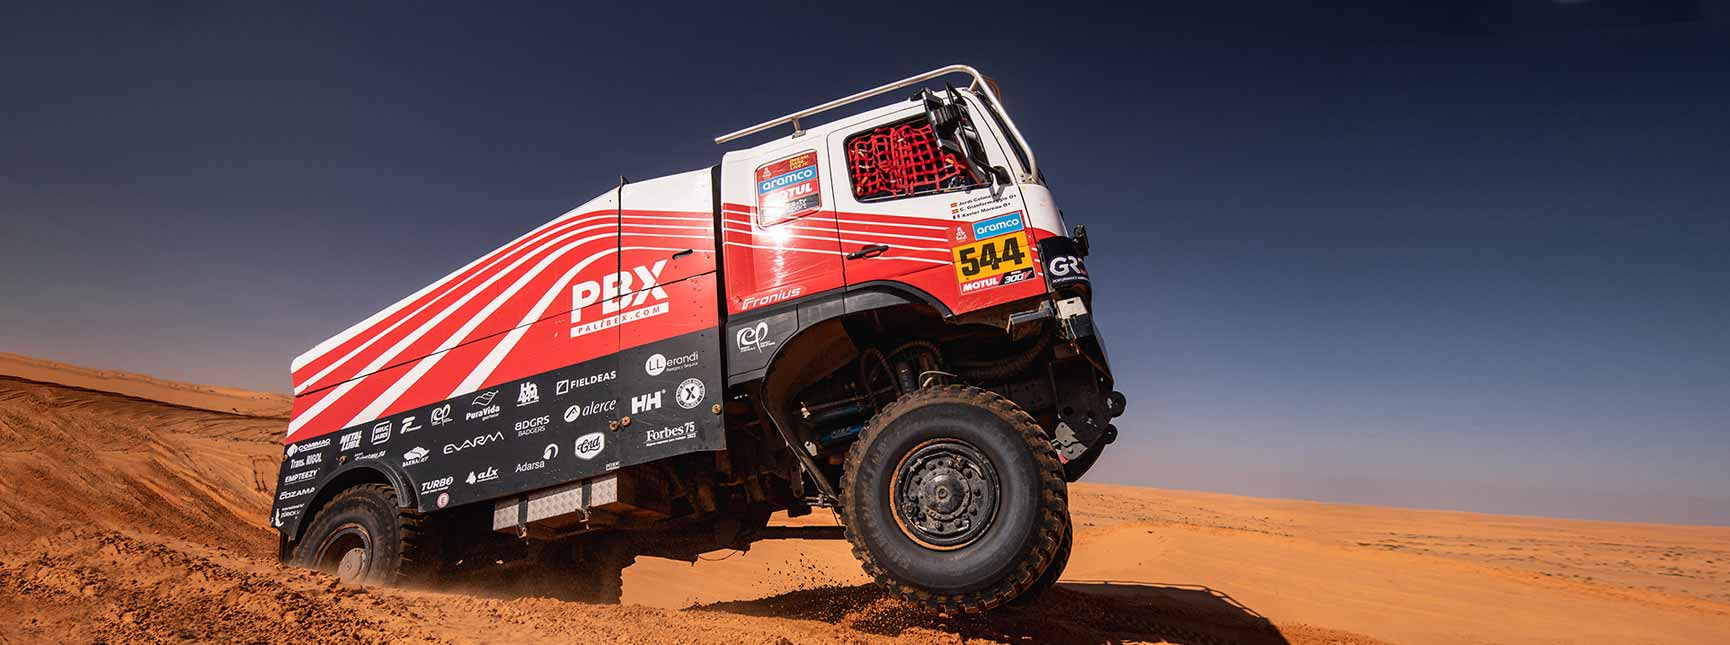 dakar team - camion dakar - camion dunas desierto - pbx dakar team - palibex